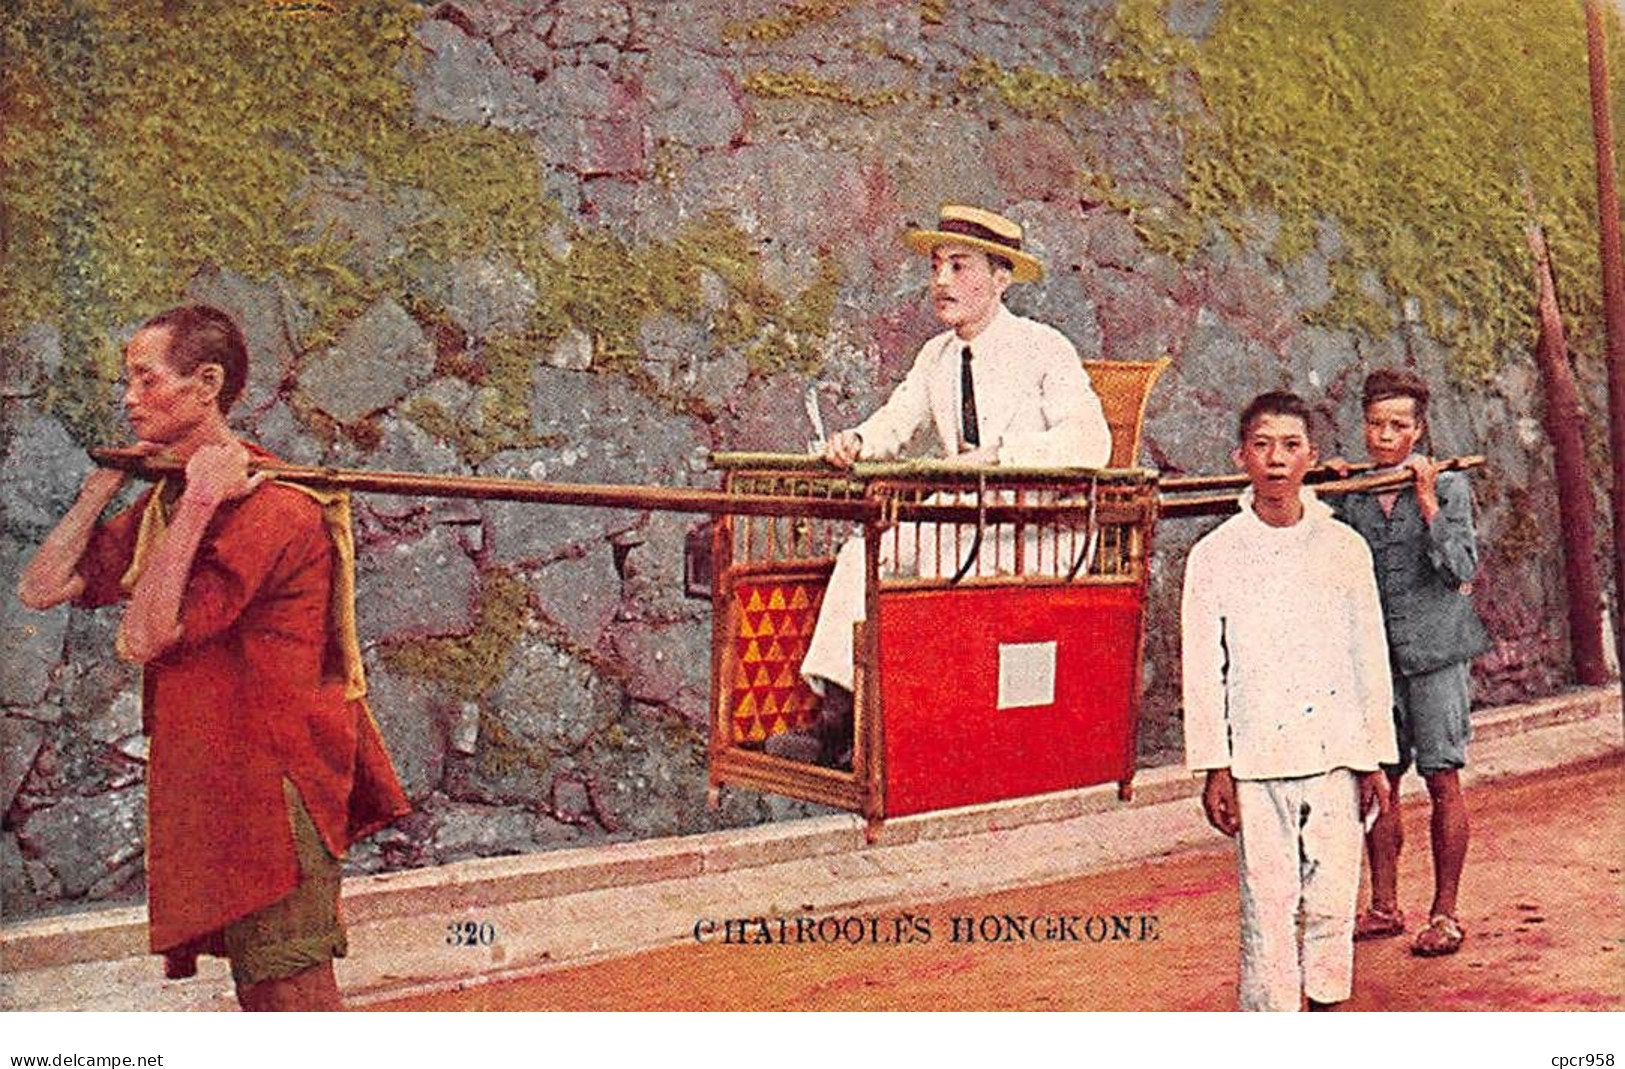 Chine - N°71866 - HONG-KONG - Chairooles - Chinois Portant Un Européen Dans Une Chaise à Porteurs - China (Hong Kong)